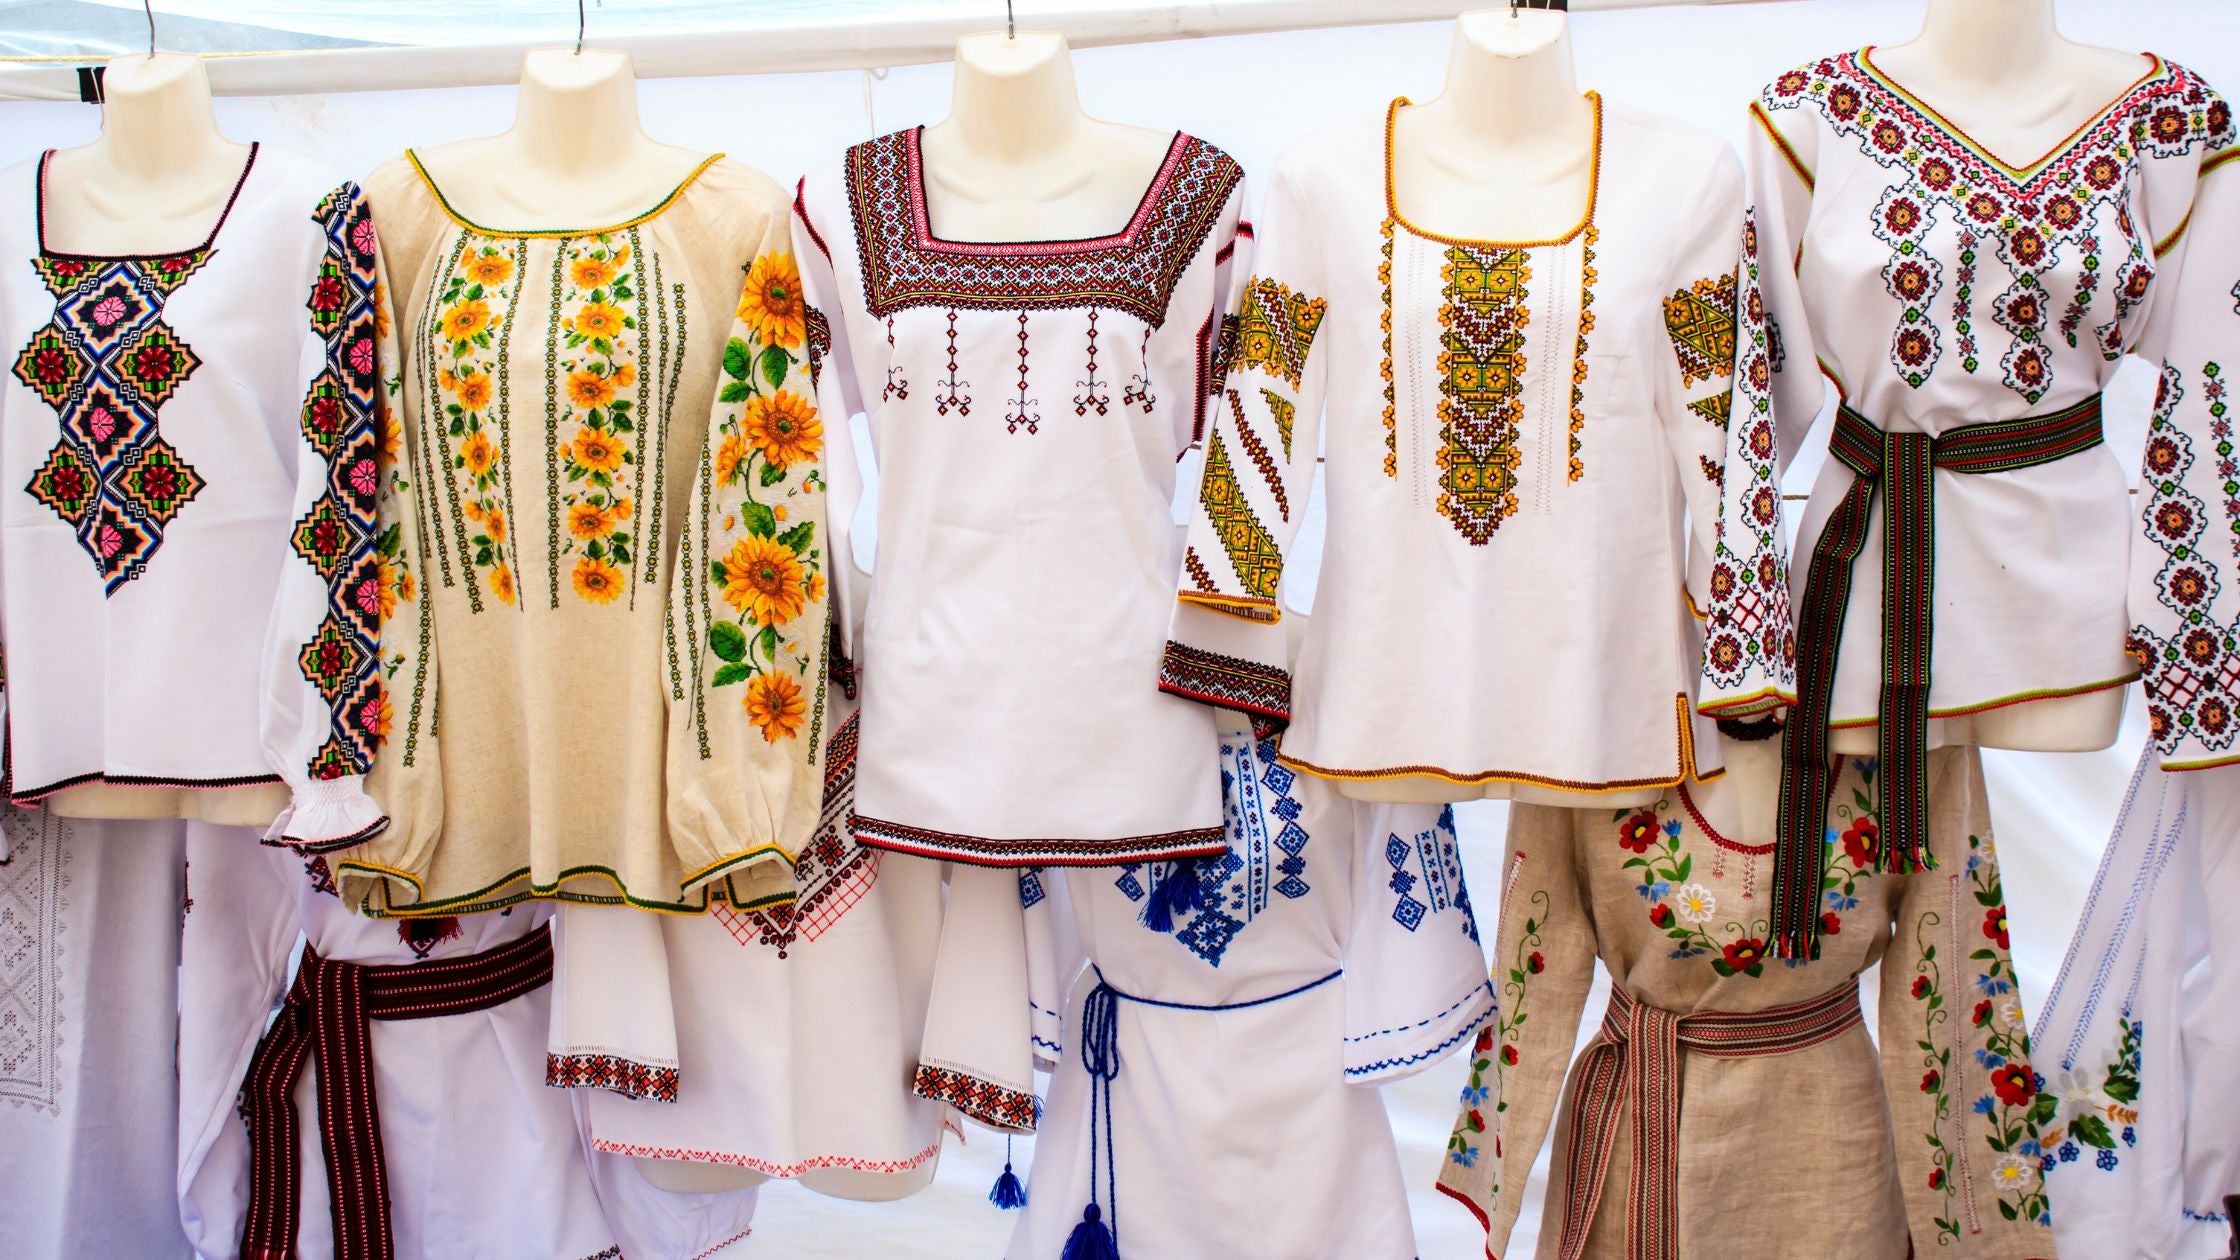 Ukrainian embroidery on shirts